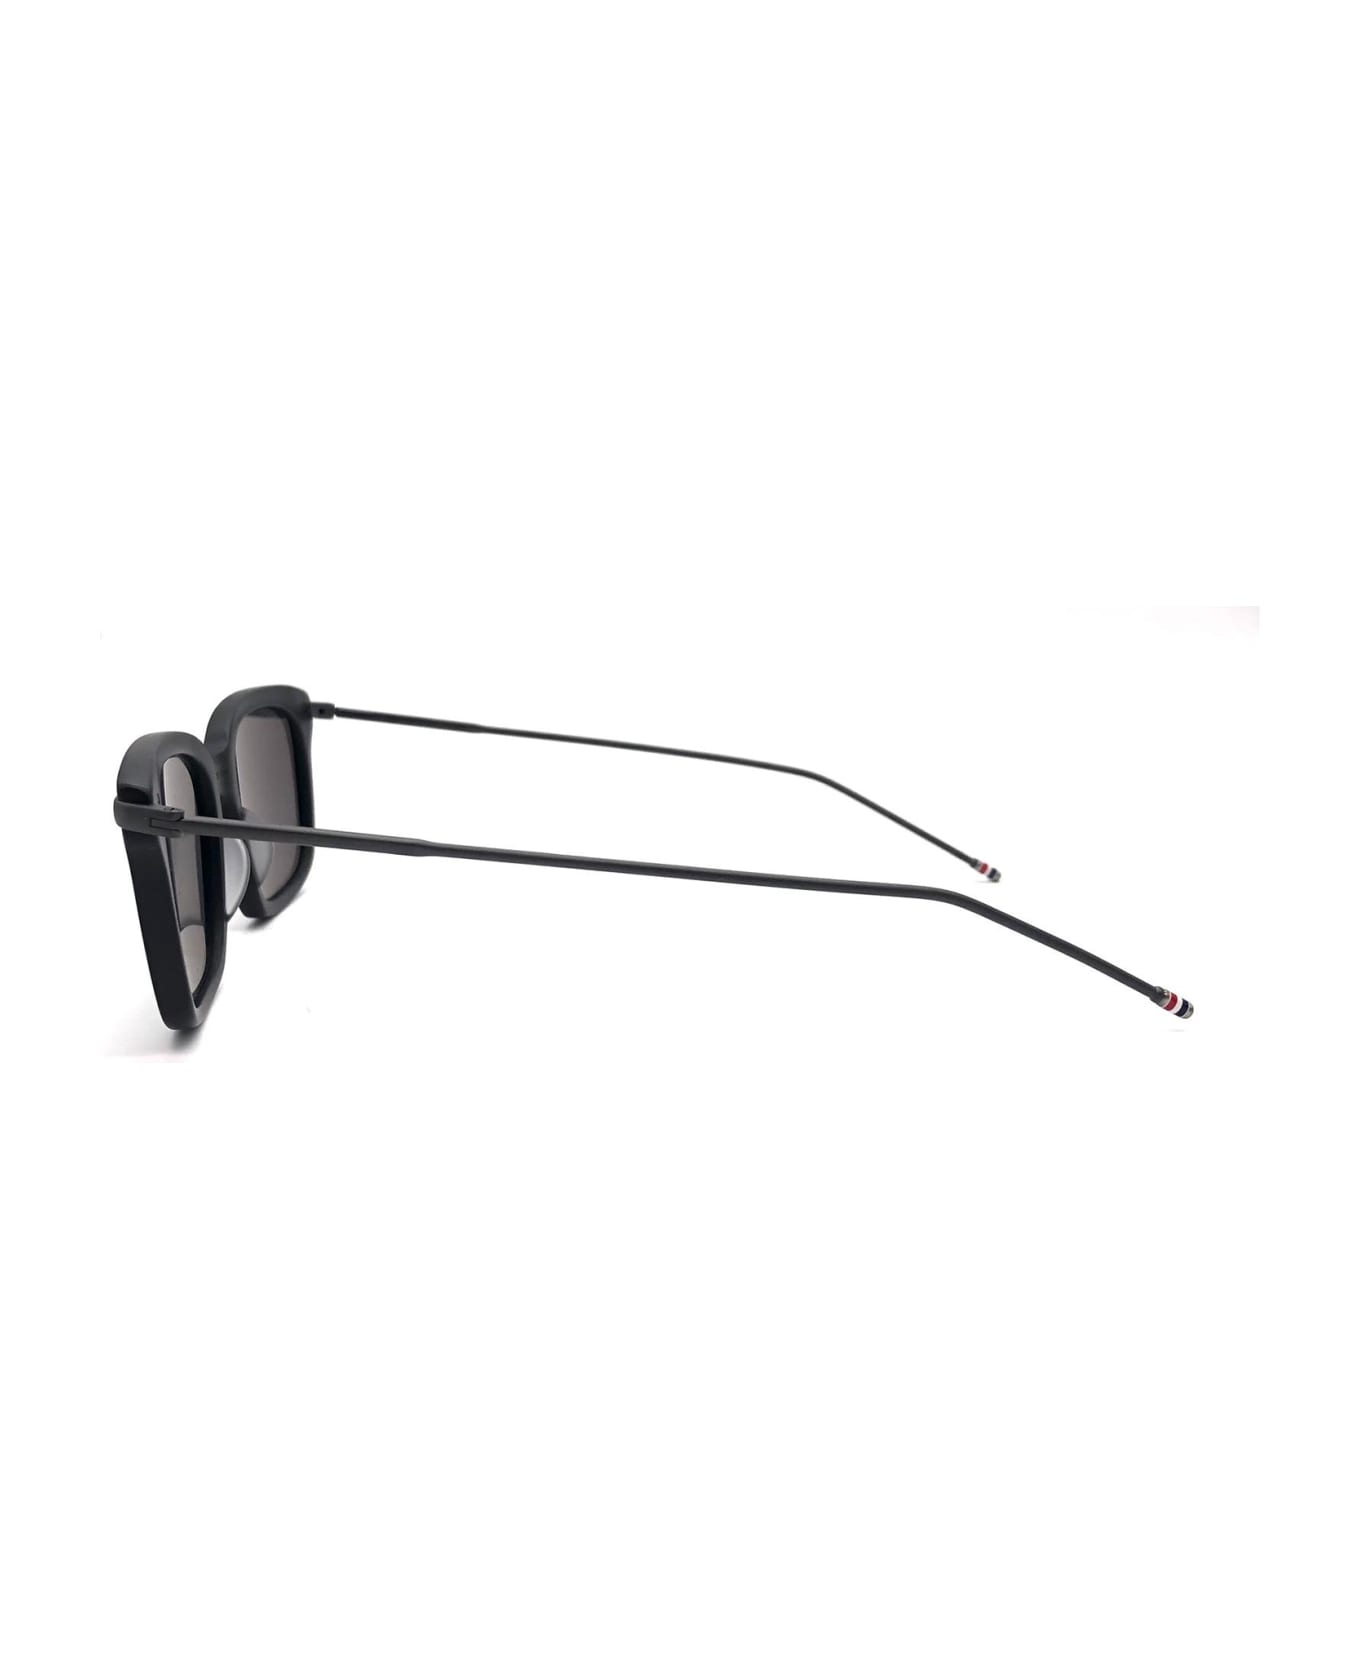 Thom Browne UES701A/G0003 Sunglasses - Black/charcoal